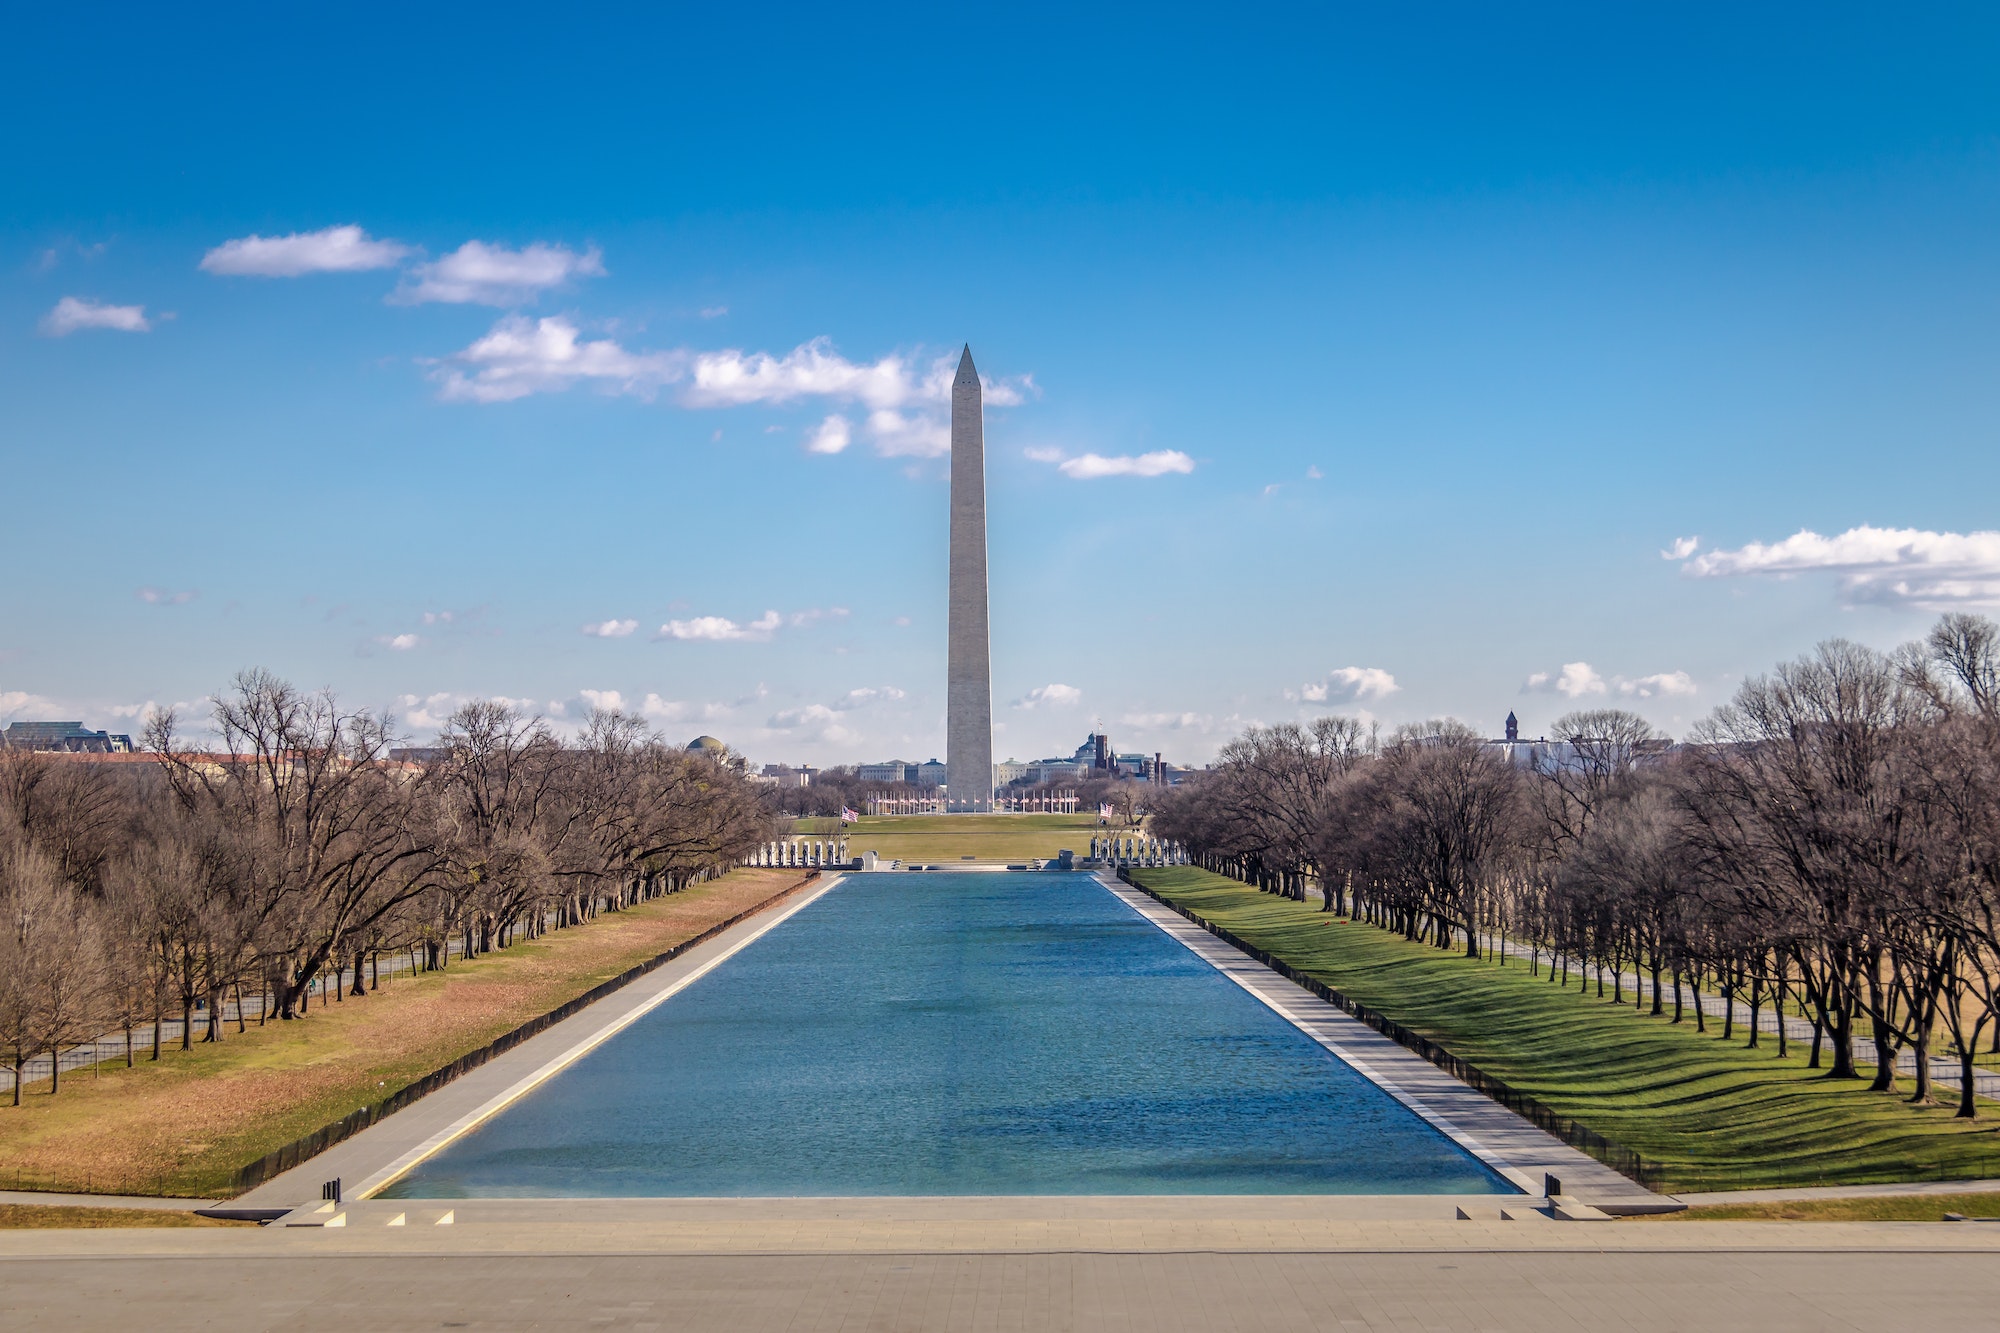 Washington Monument and reflection pool - Washington, D.C., USA J. U. Passion - Realtor, Writer, Preacher, Teacher